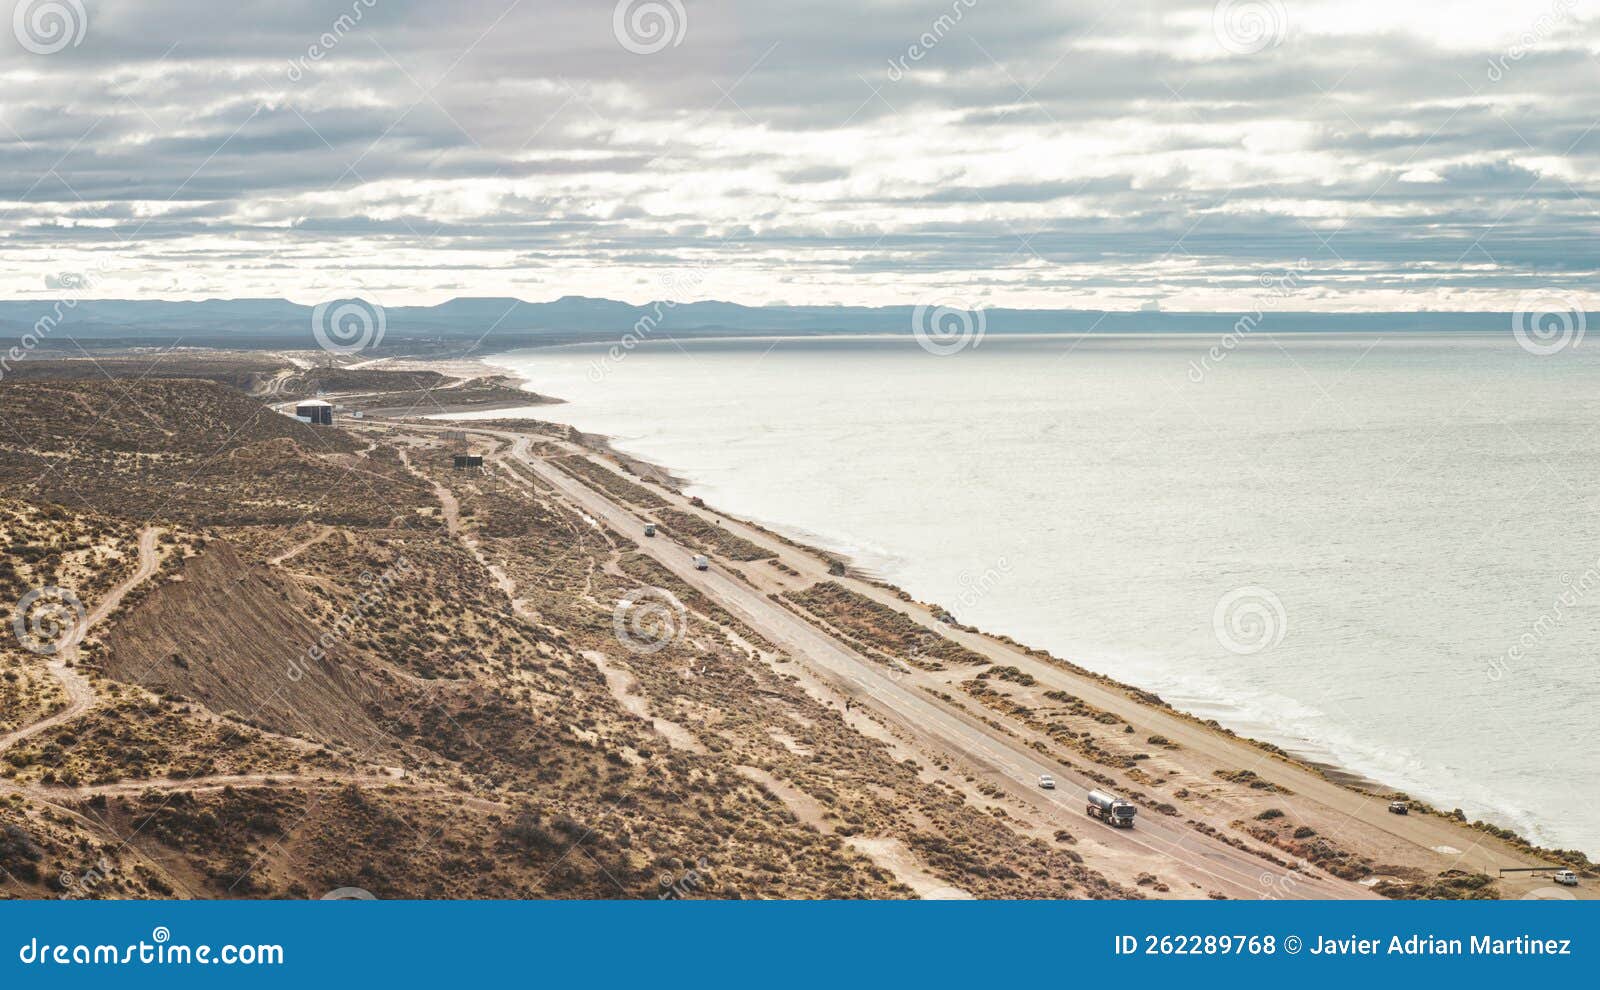 route skirting the coast of the atlantic sea between caleta olivia and comodoro rivadavianational route three, argentina